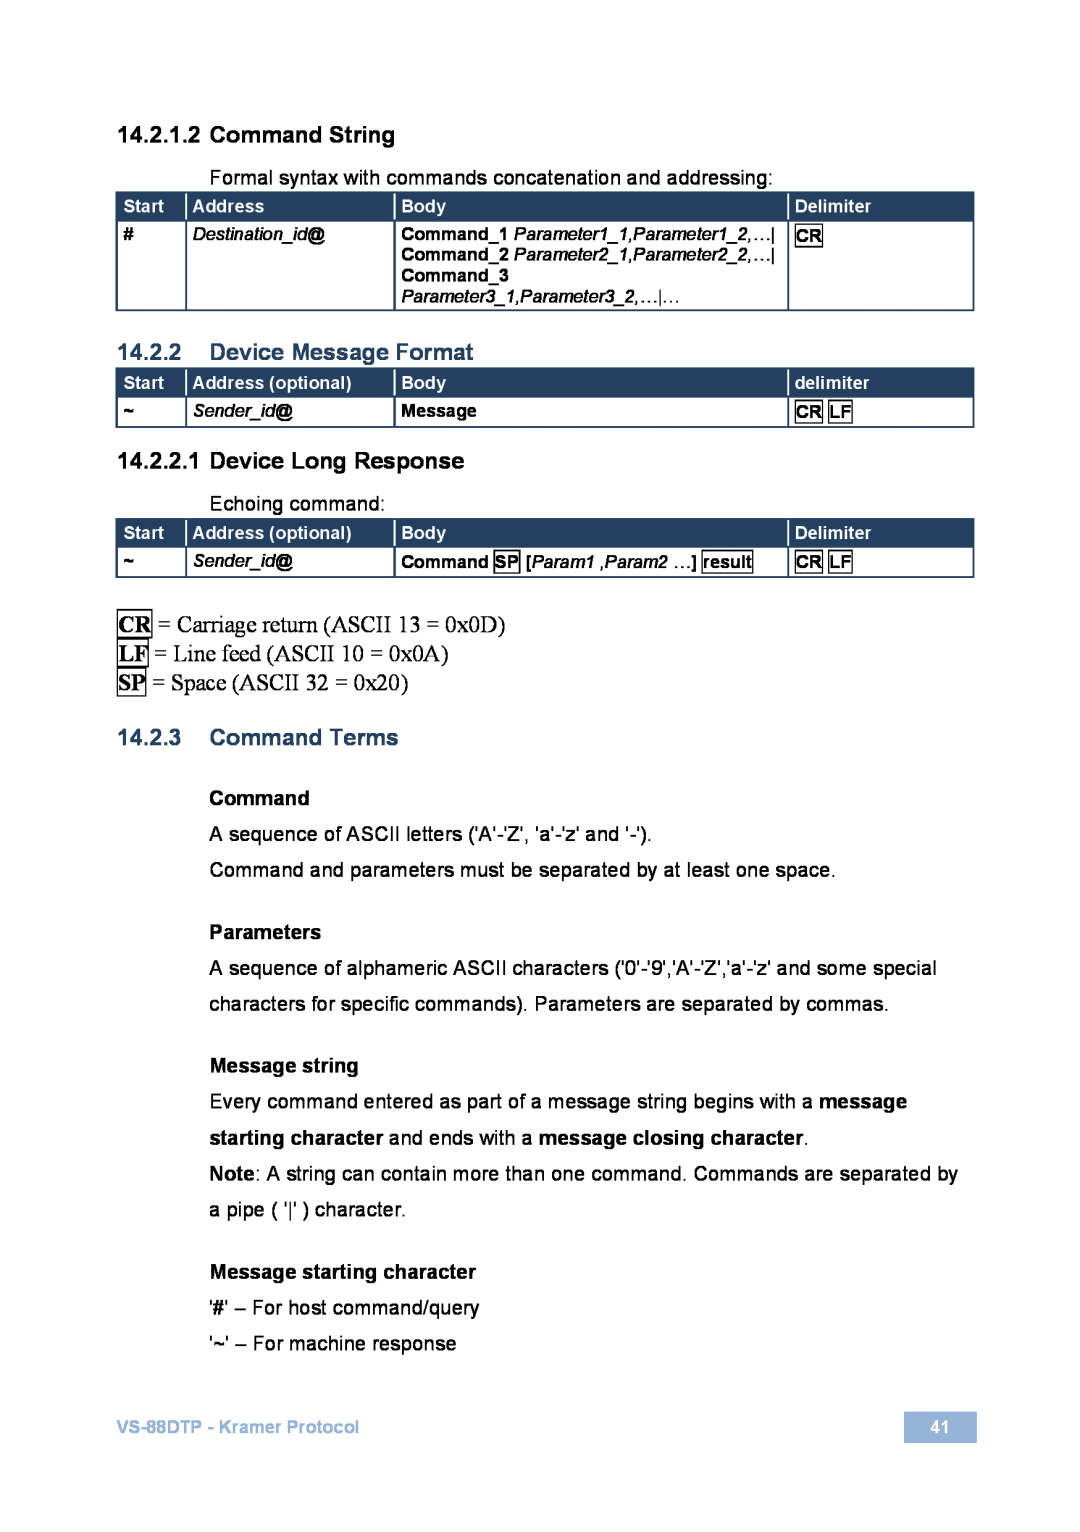 Kramer Electronics VS-88DTP Command String, 14.2.2, Device Message Format, Device Long Response, Command Terms, Parameters 